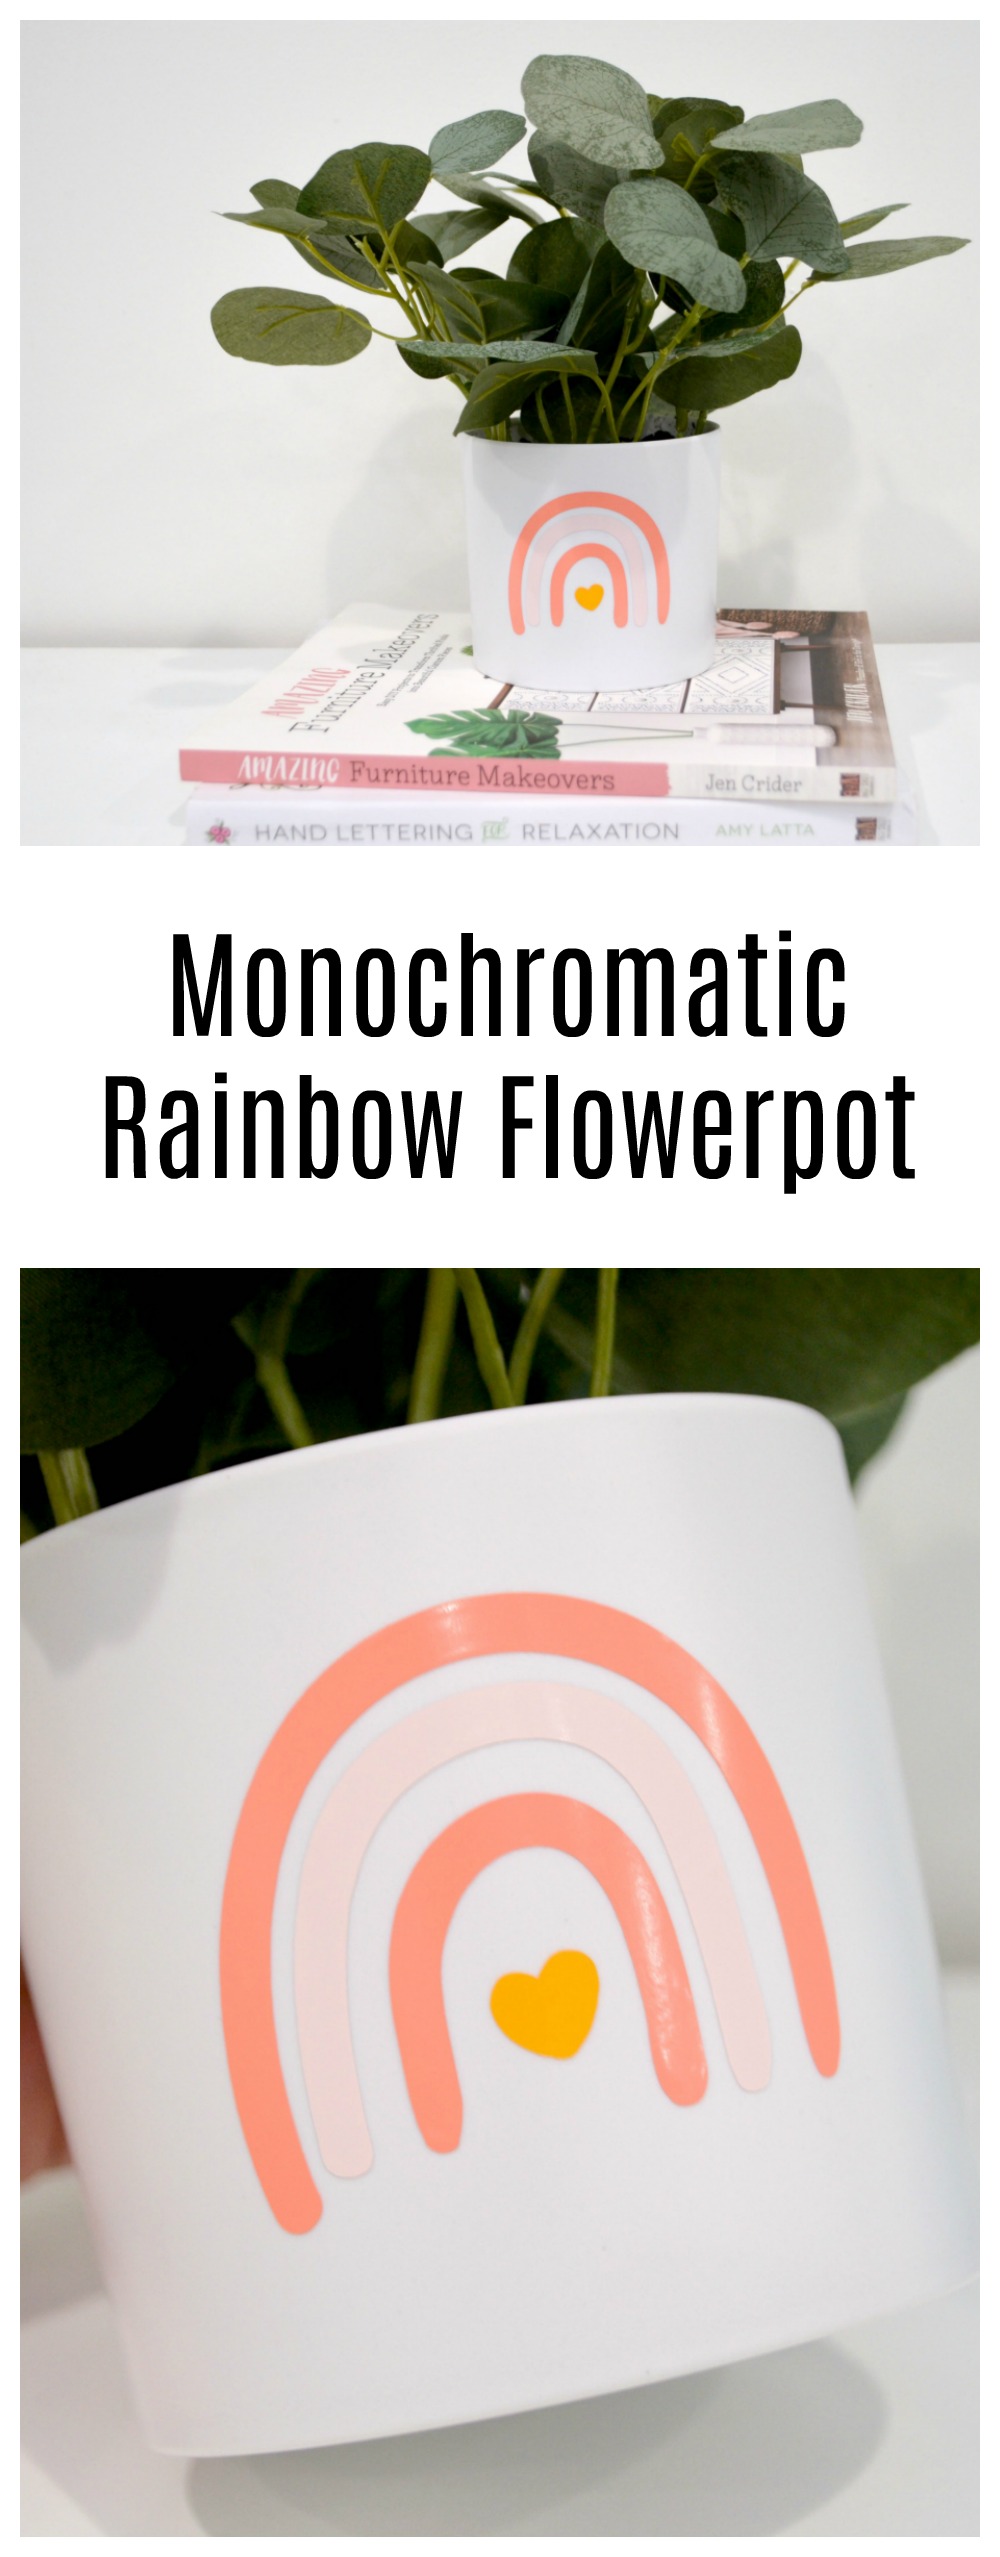 Monochromatic Rainbow Flowerpot